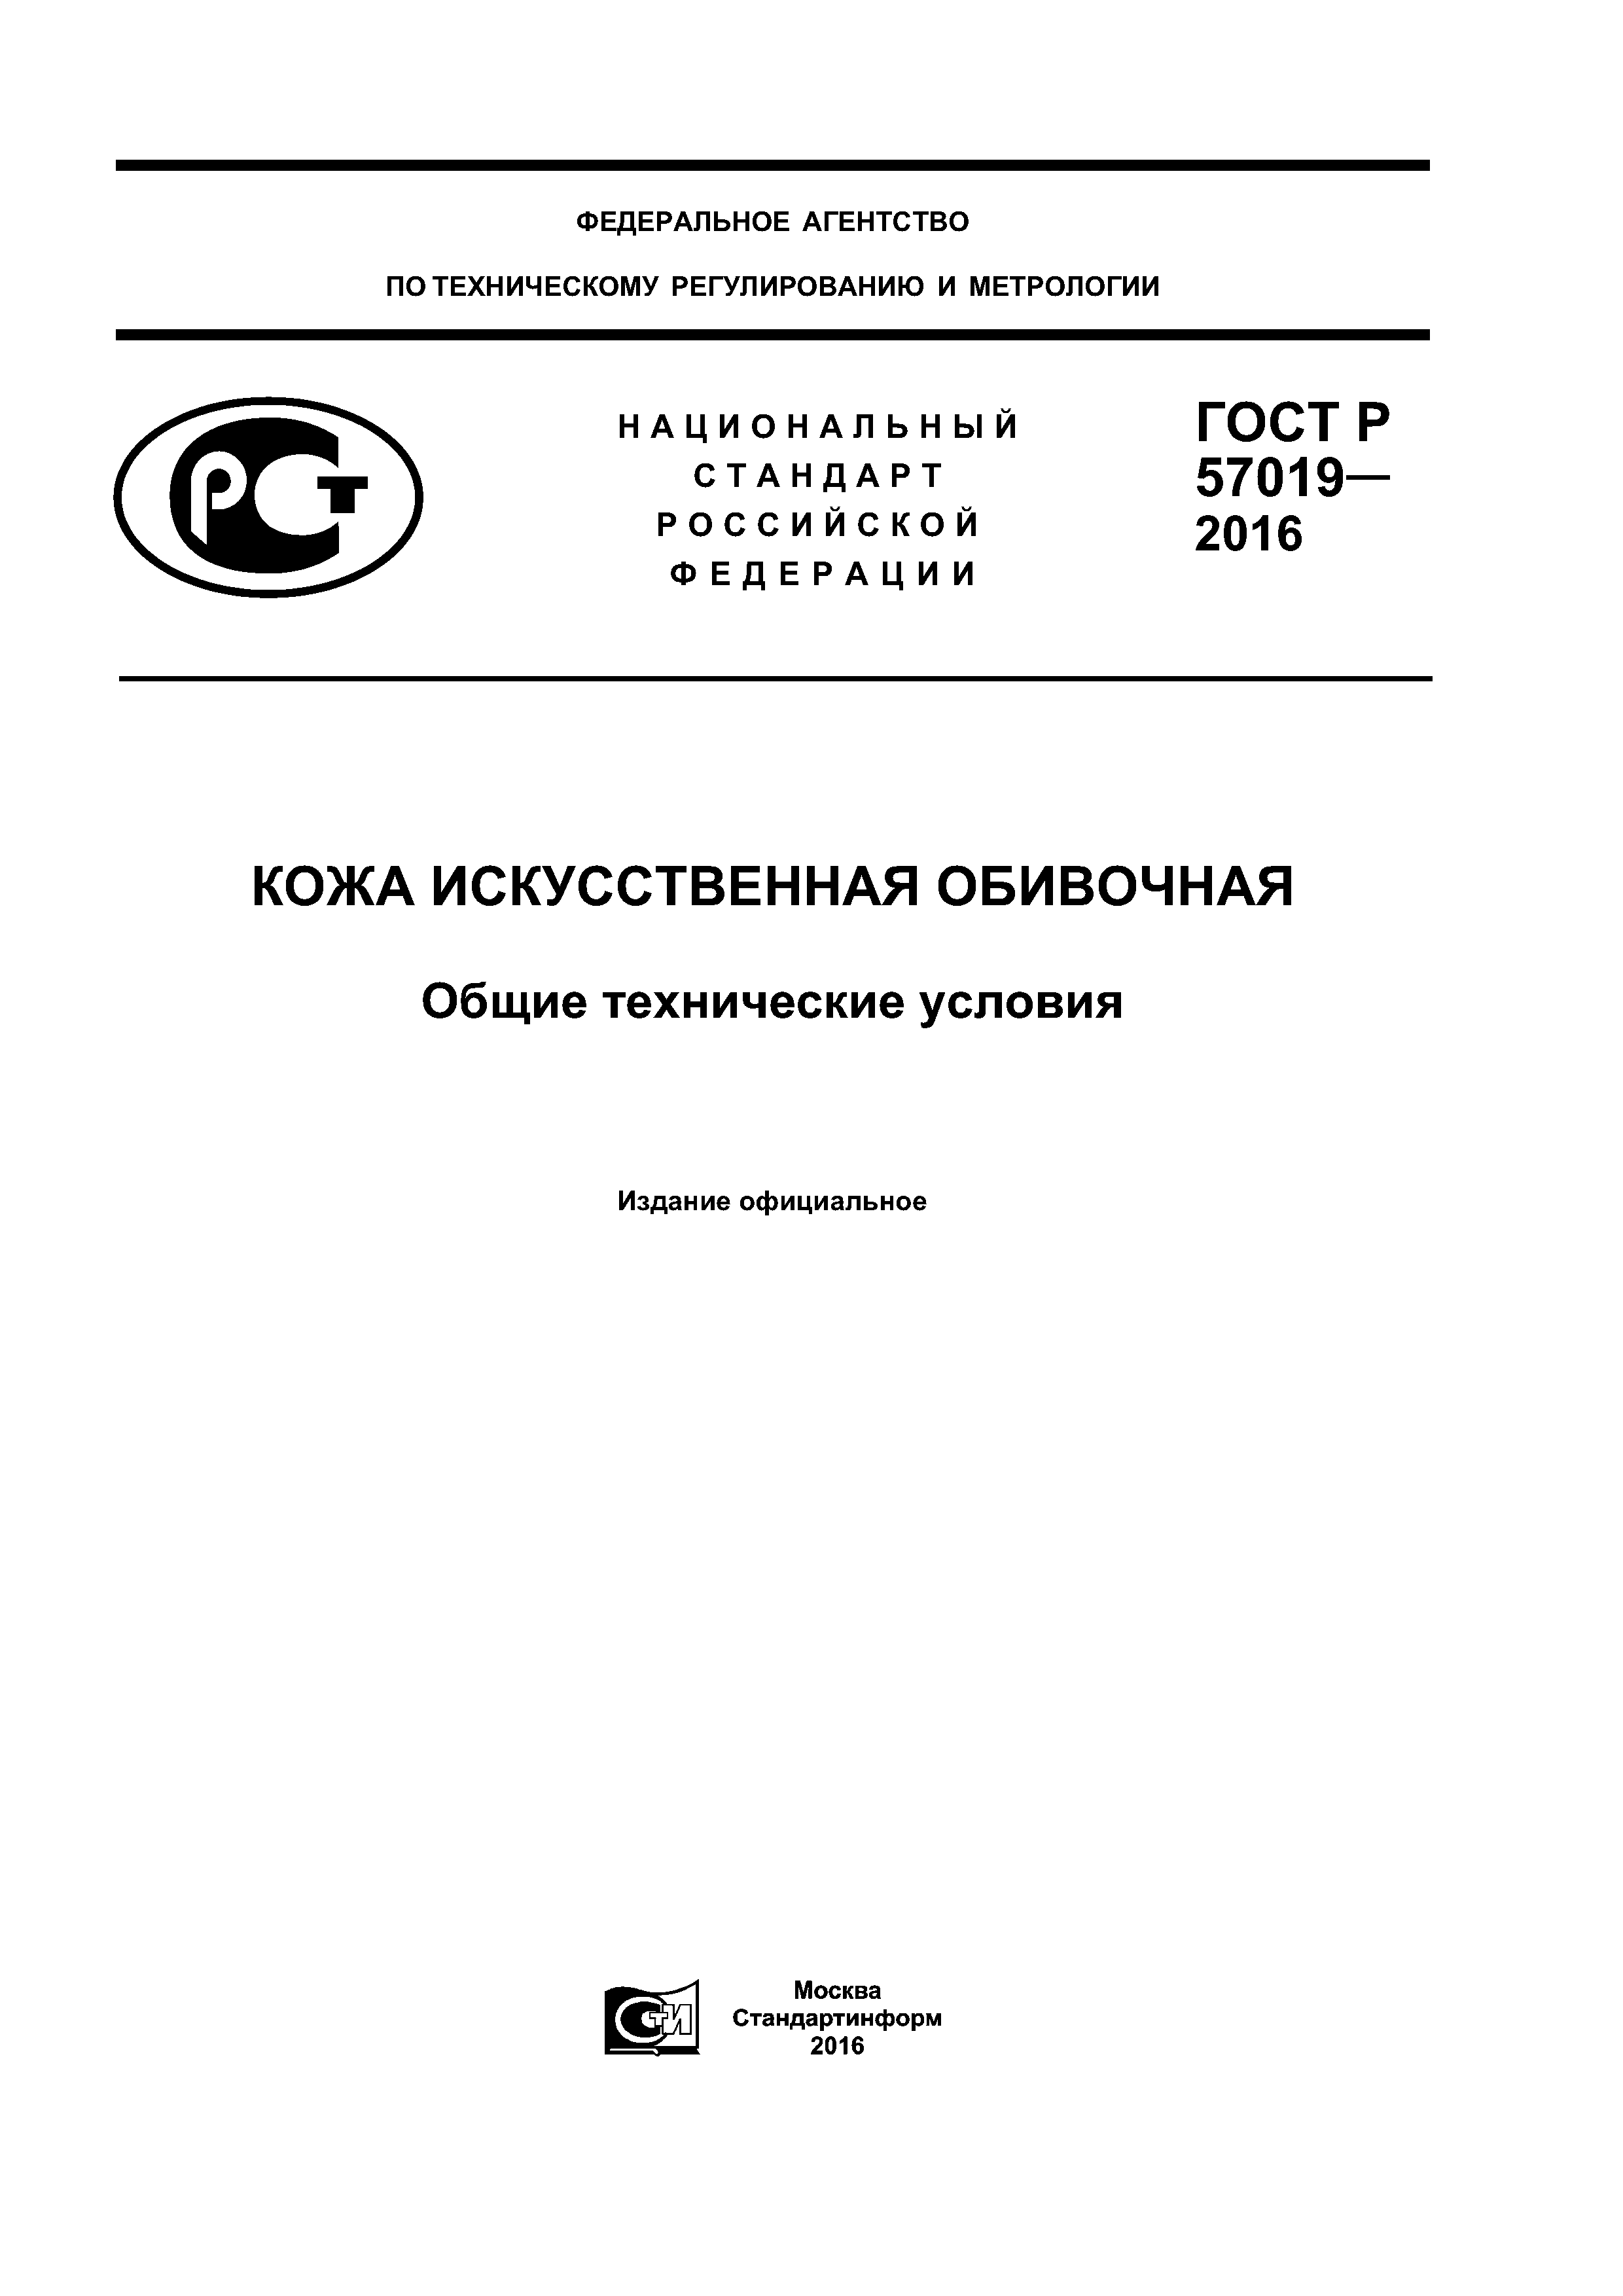 ГОСТ Р 57019-2016